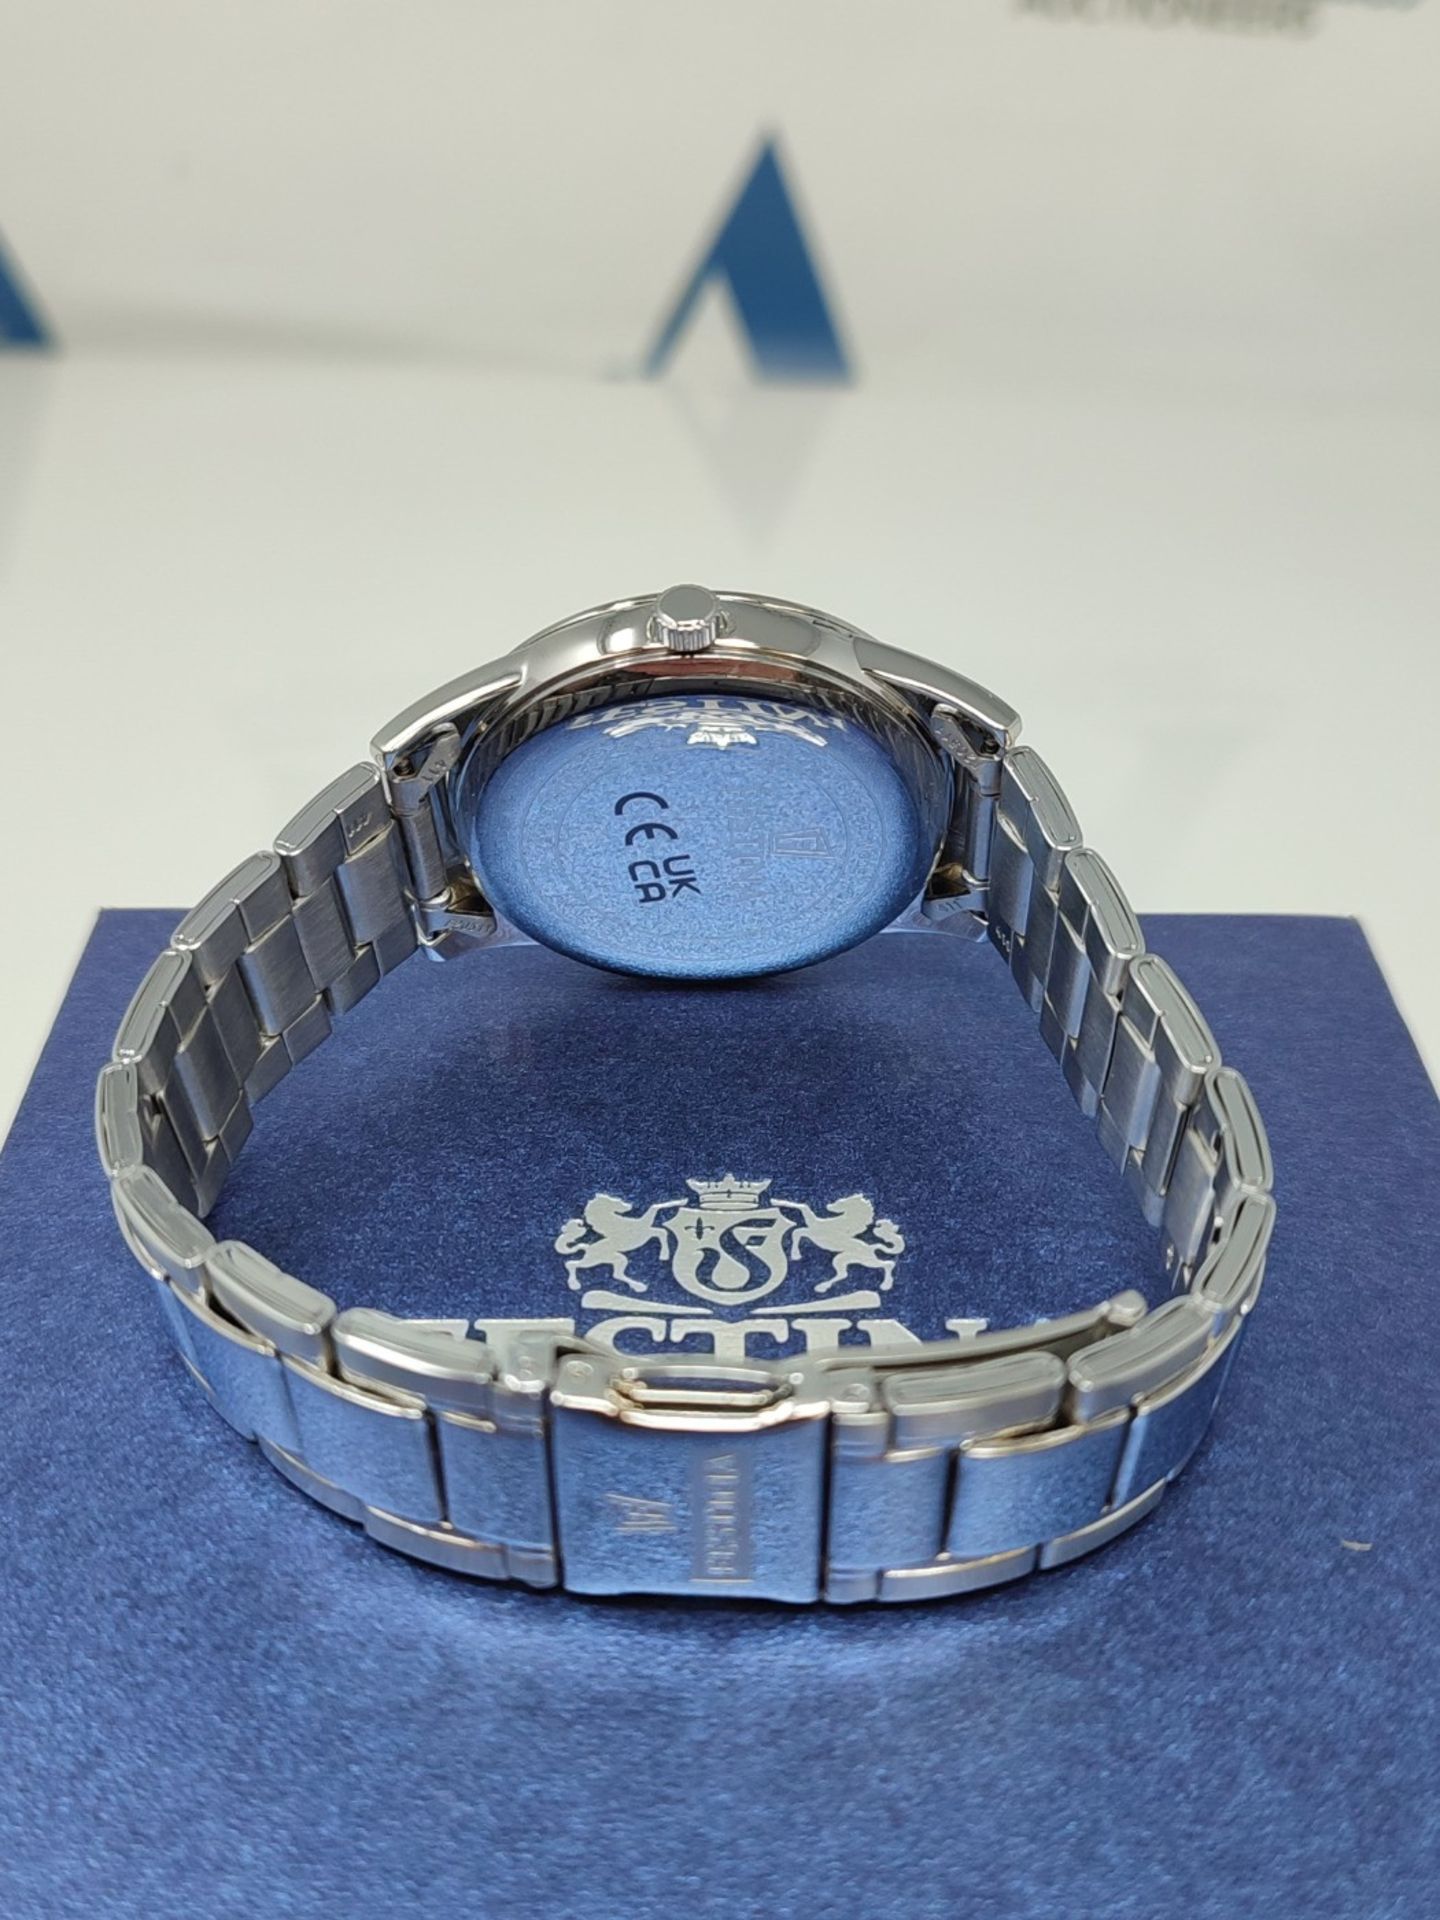 RRP £71.00 Festina Men's Analog-Digital Quartz Watch with Stainless Steel Bracelet - Image 3 of 3